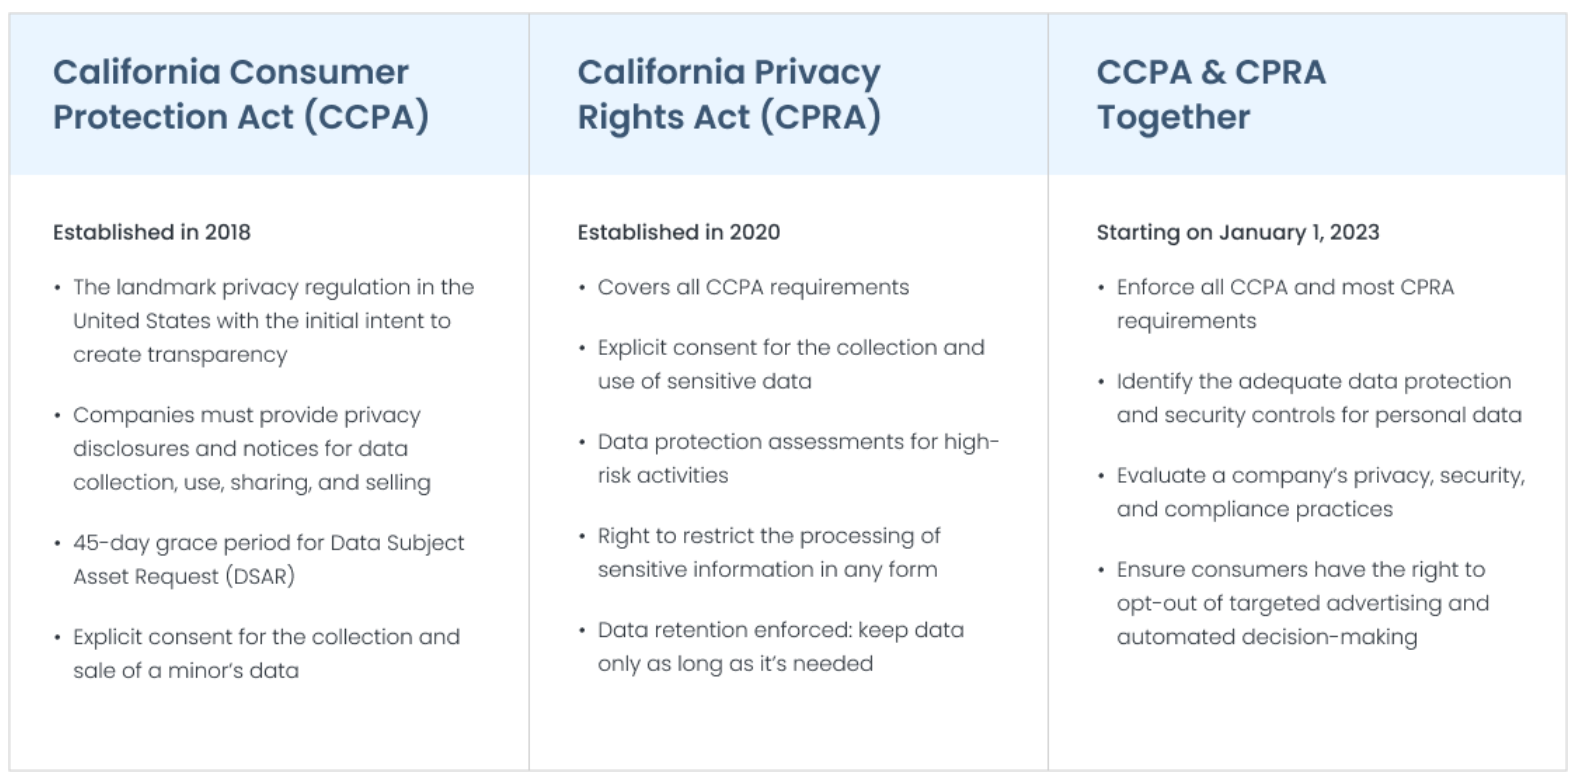 CCPA & CPRA